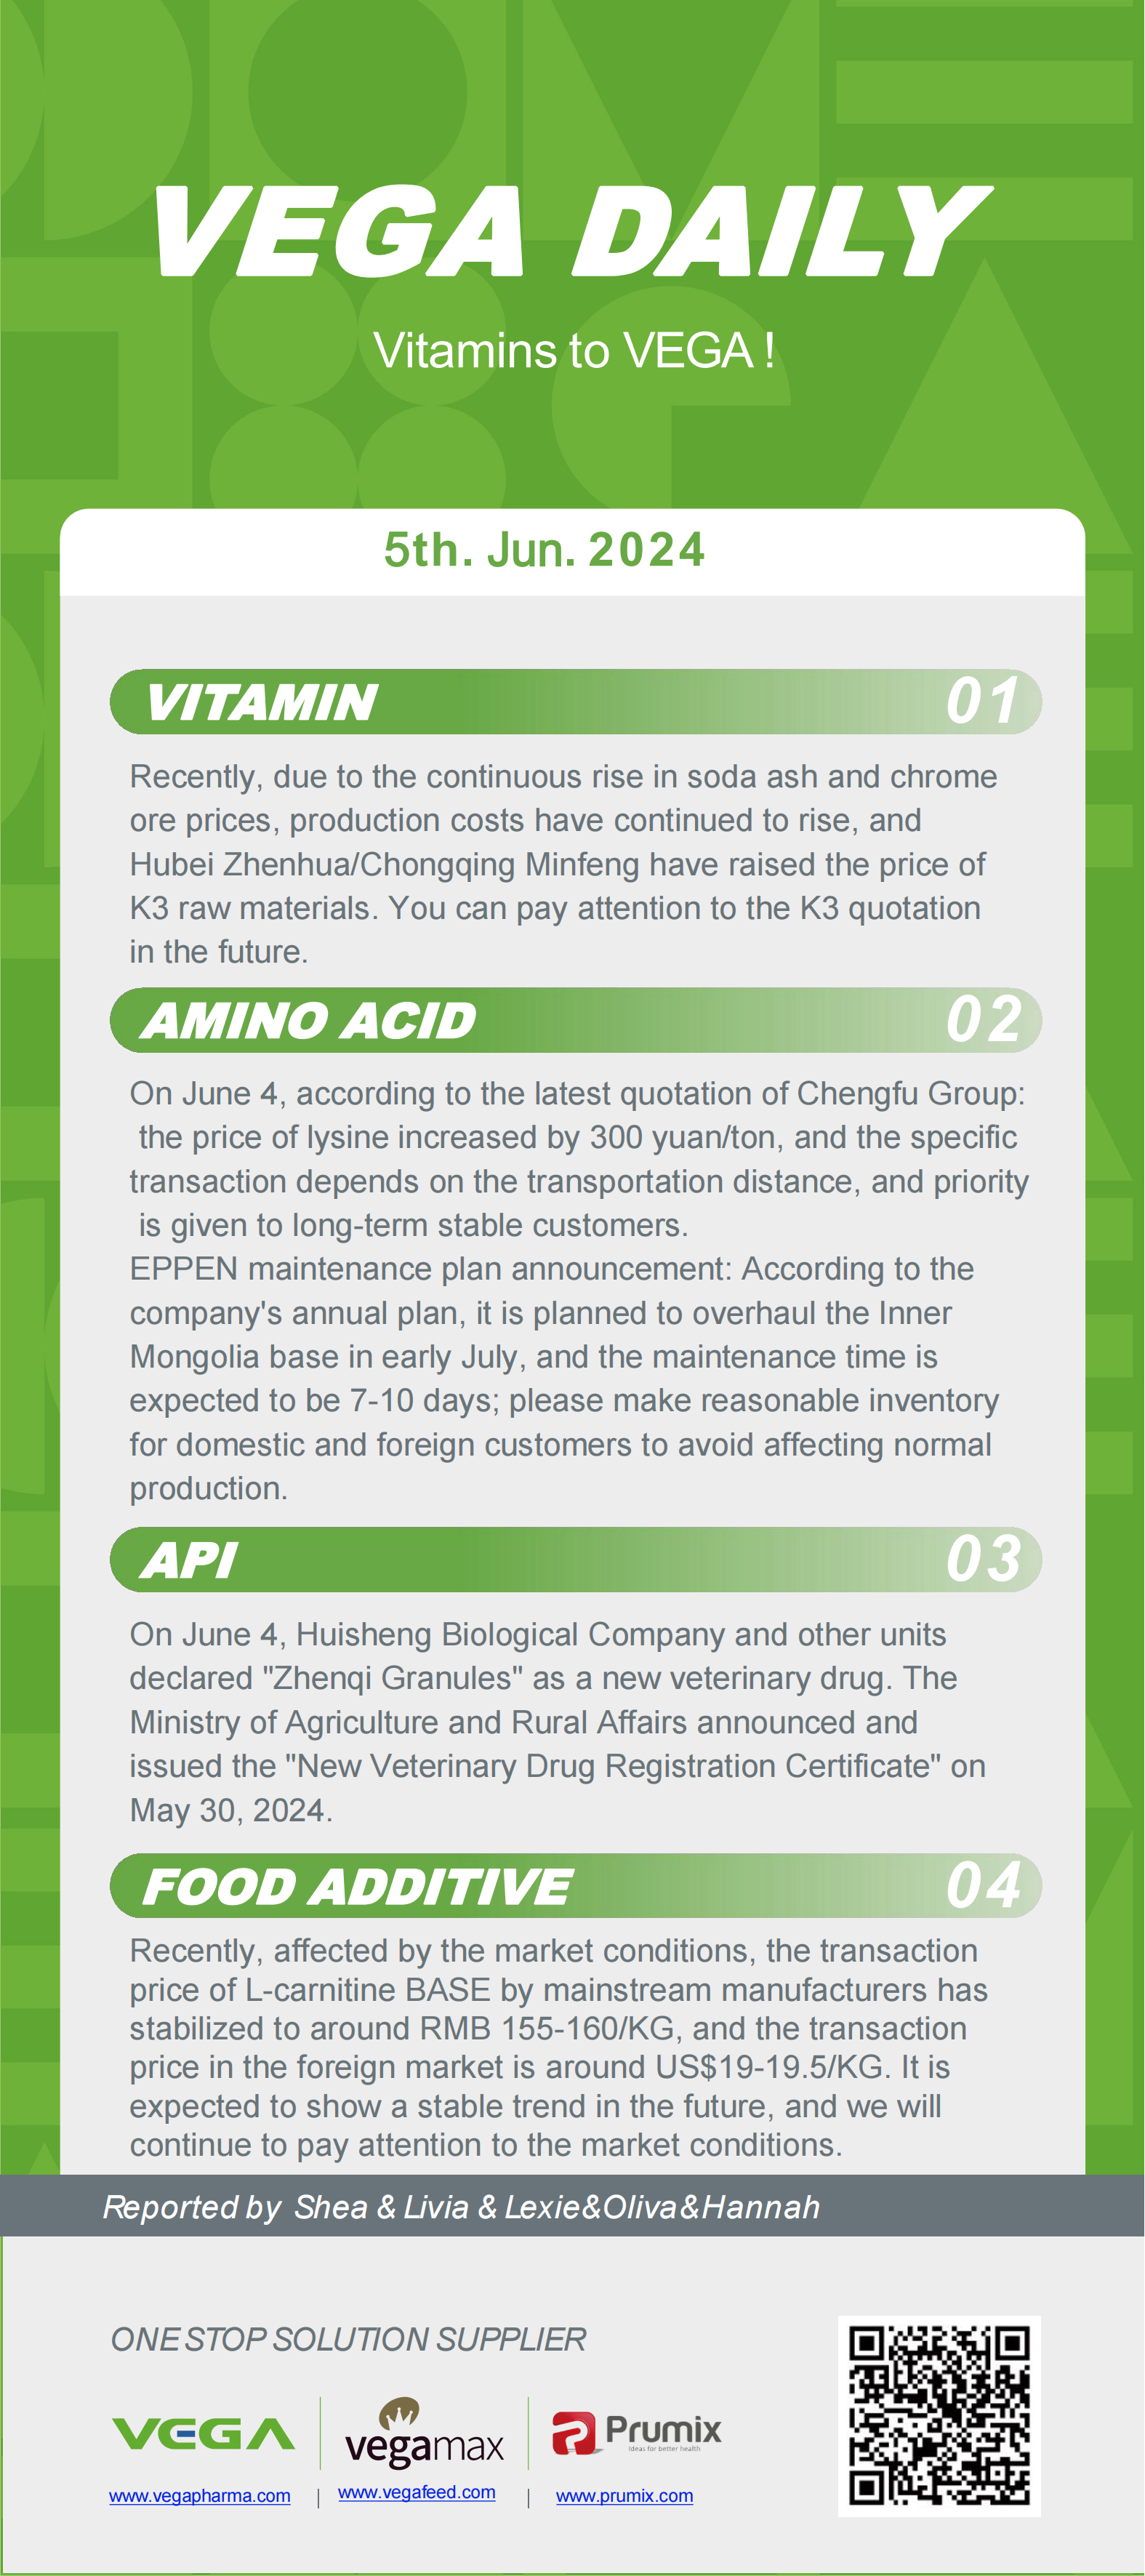 Vega Daily Dated on Jun 5th 2024 Vitamin Amino Acid APl Food Additives.png